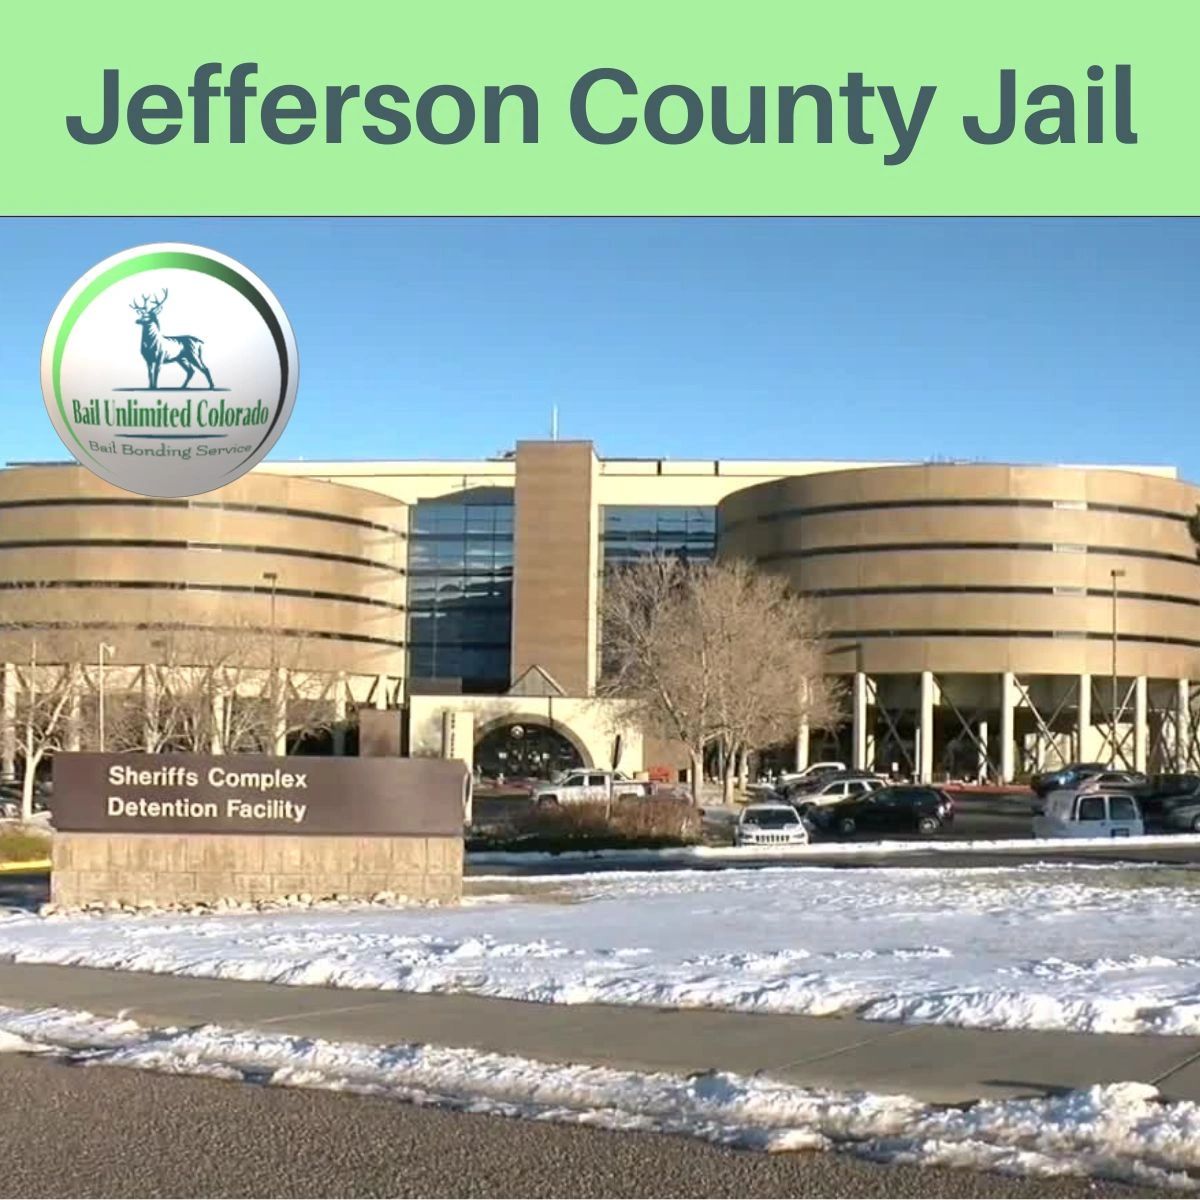 Jefferson County Jail Sheriffs Complex Detention Facility LOGO Bail Unlimited Colorado JEFFCO Golden